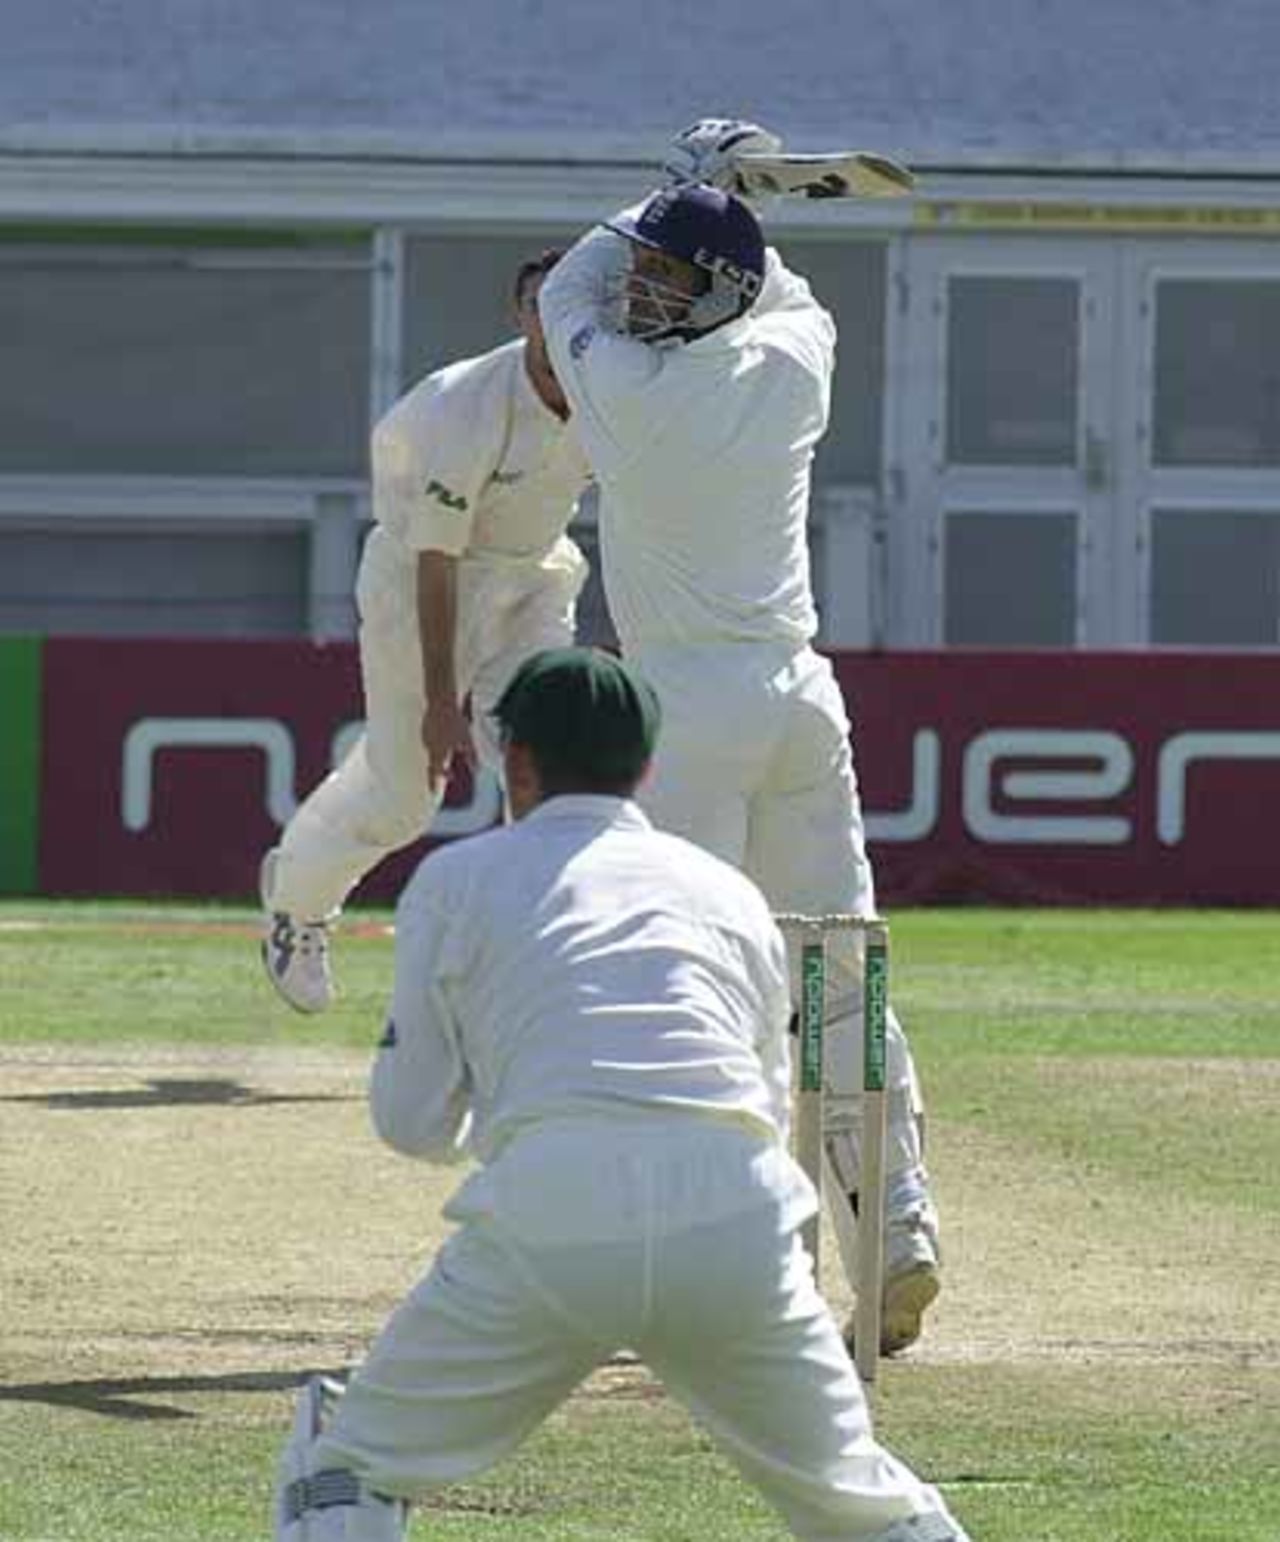 England v Australia, The Ashes 4th npower Test, Leeds, 16-20 Aug 2001